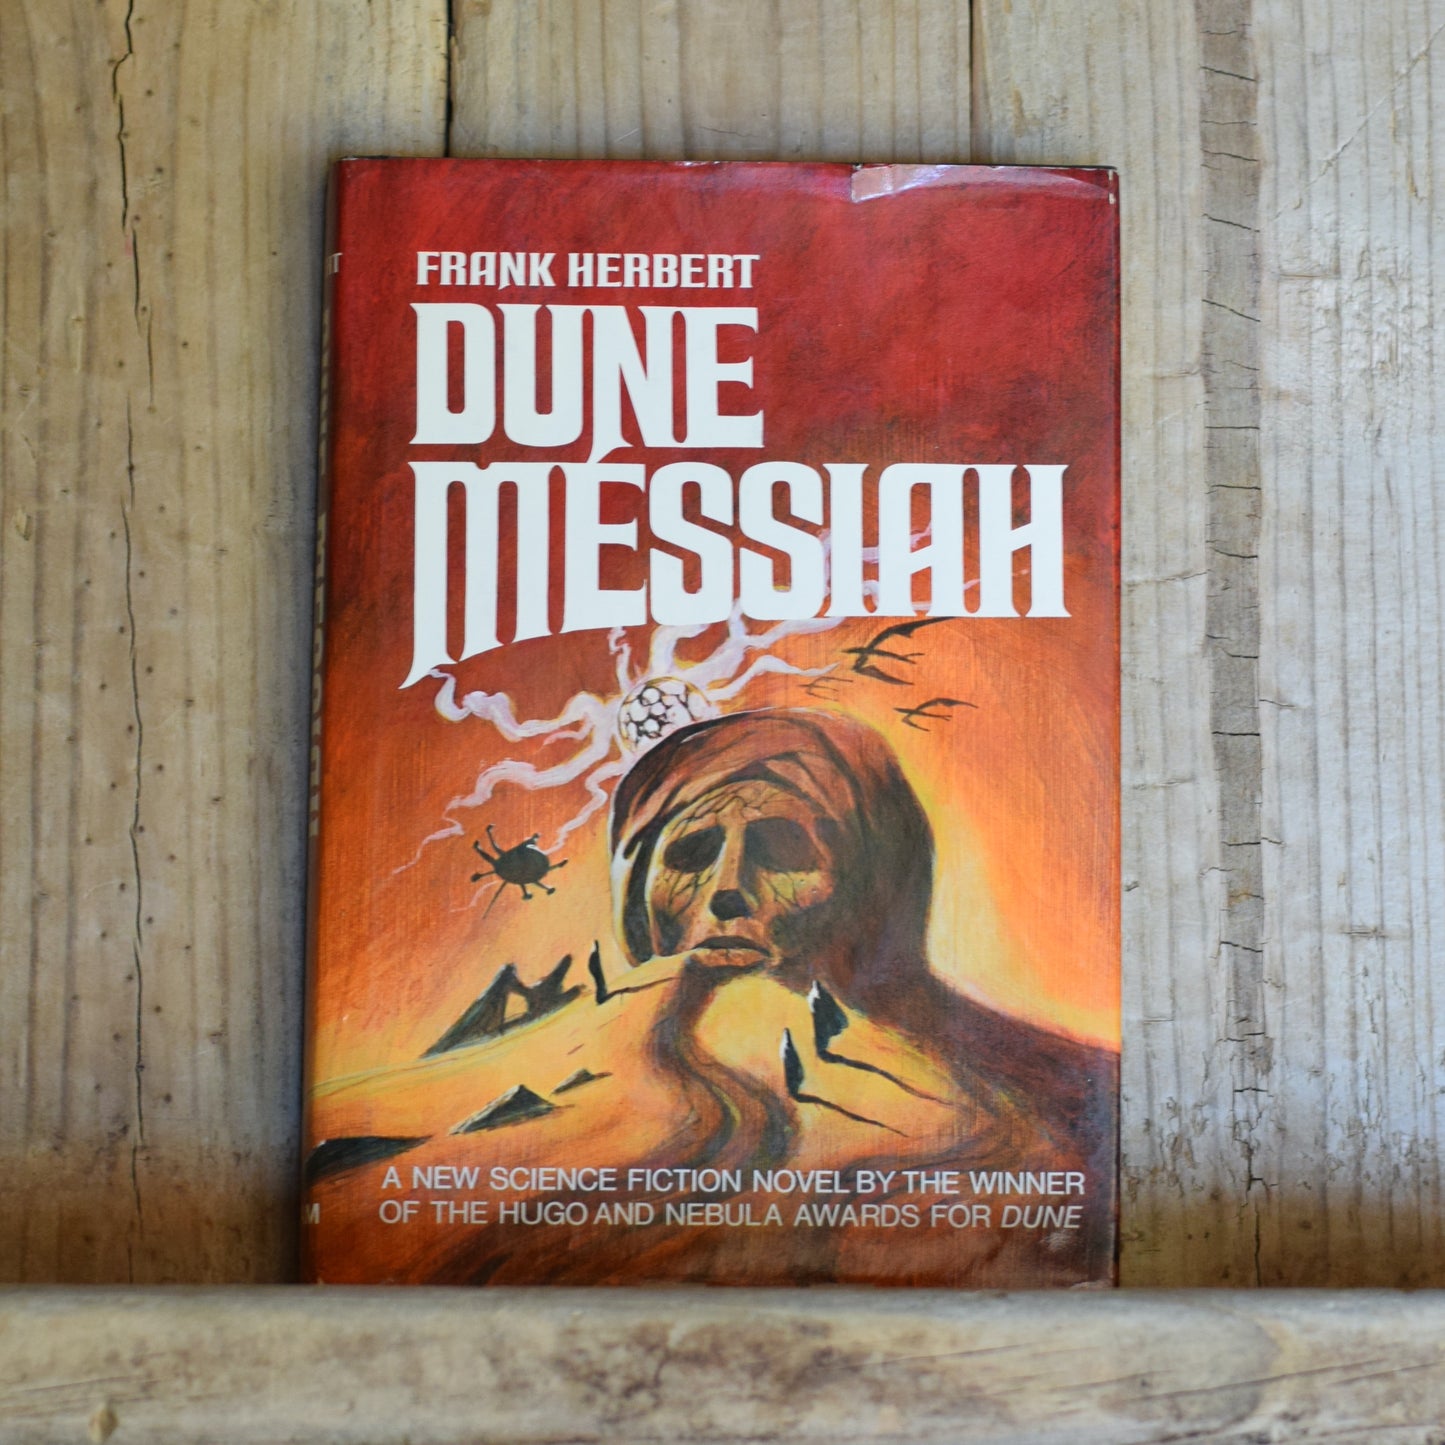 Vintage Sci-fi Hardback: Frank Herbert - Dune Messiah